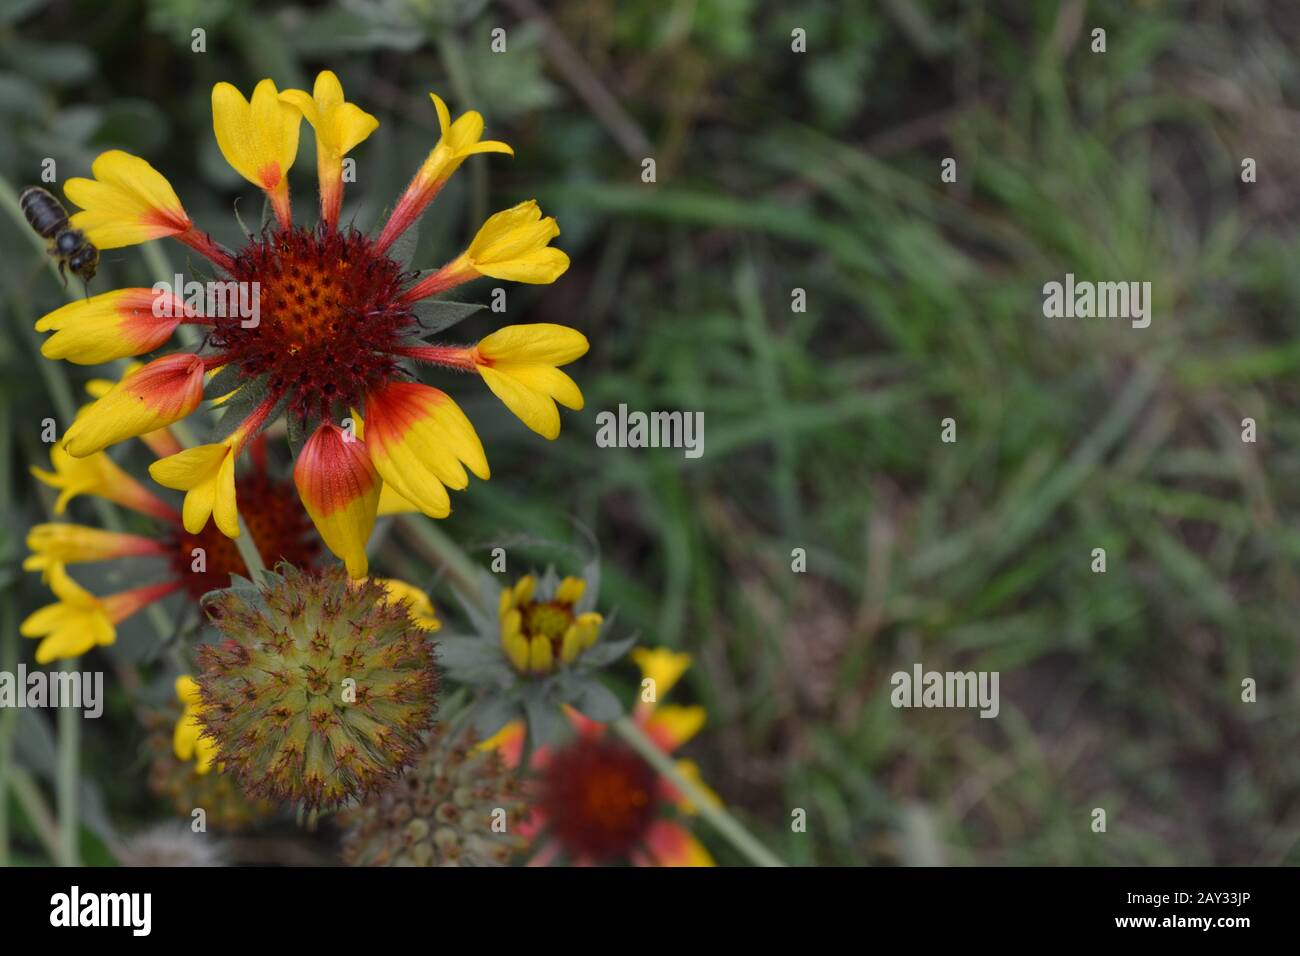 Gaillardia. G. hybrida Fanfare. Summer flower yellow. Annual plant. Sunny summer. Blurring background Stock Photo